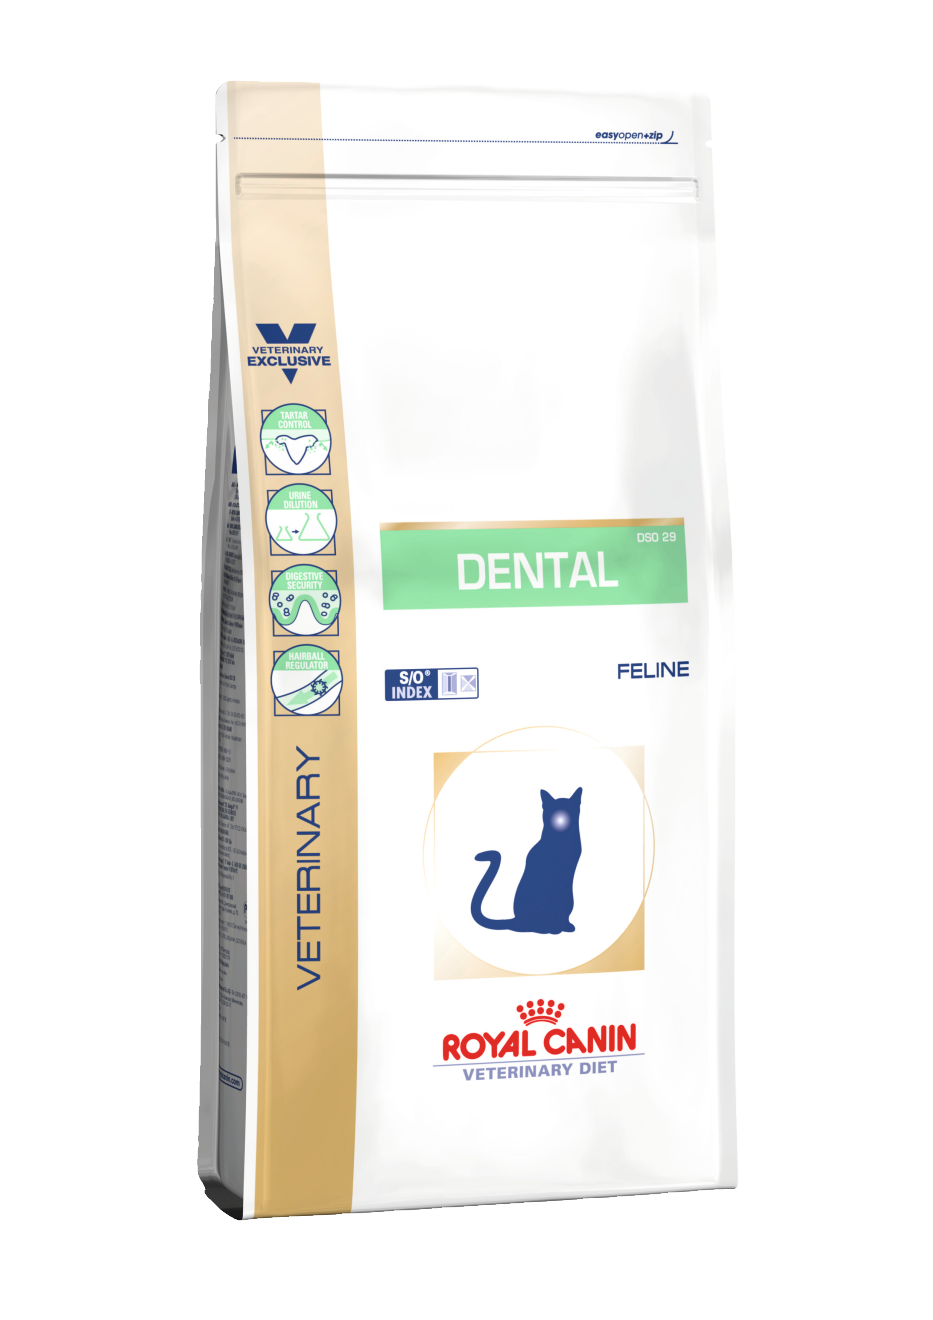 royal canin oral cat